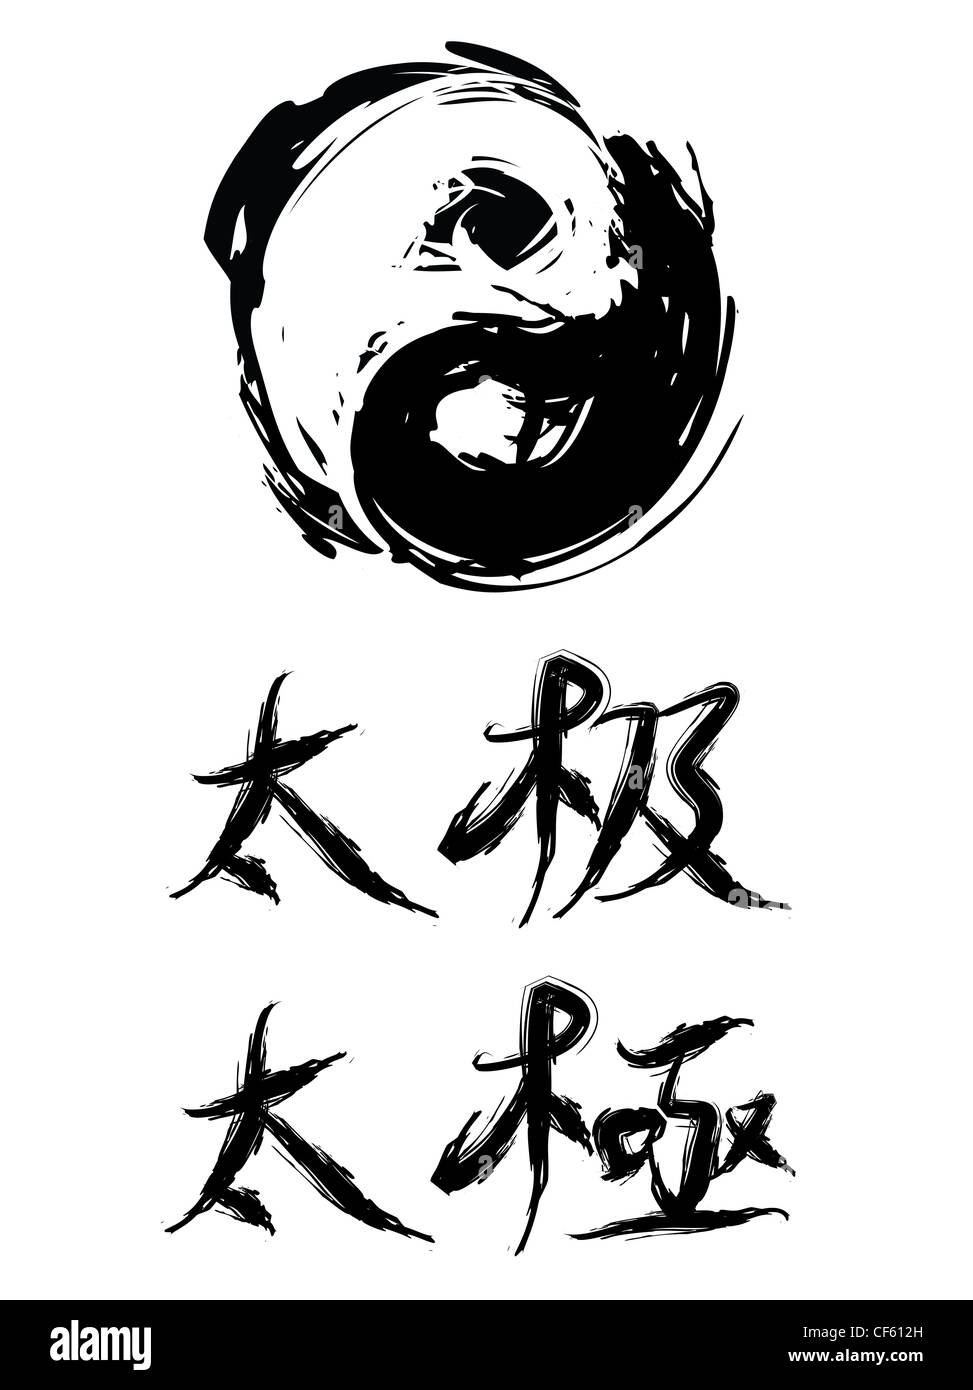 yin yang symbol and chinese character, oriental symbols Stock Photo - Alamy